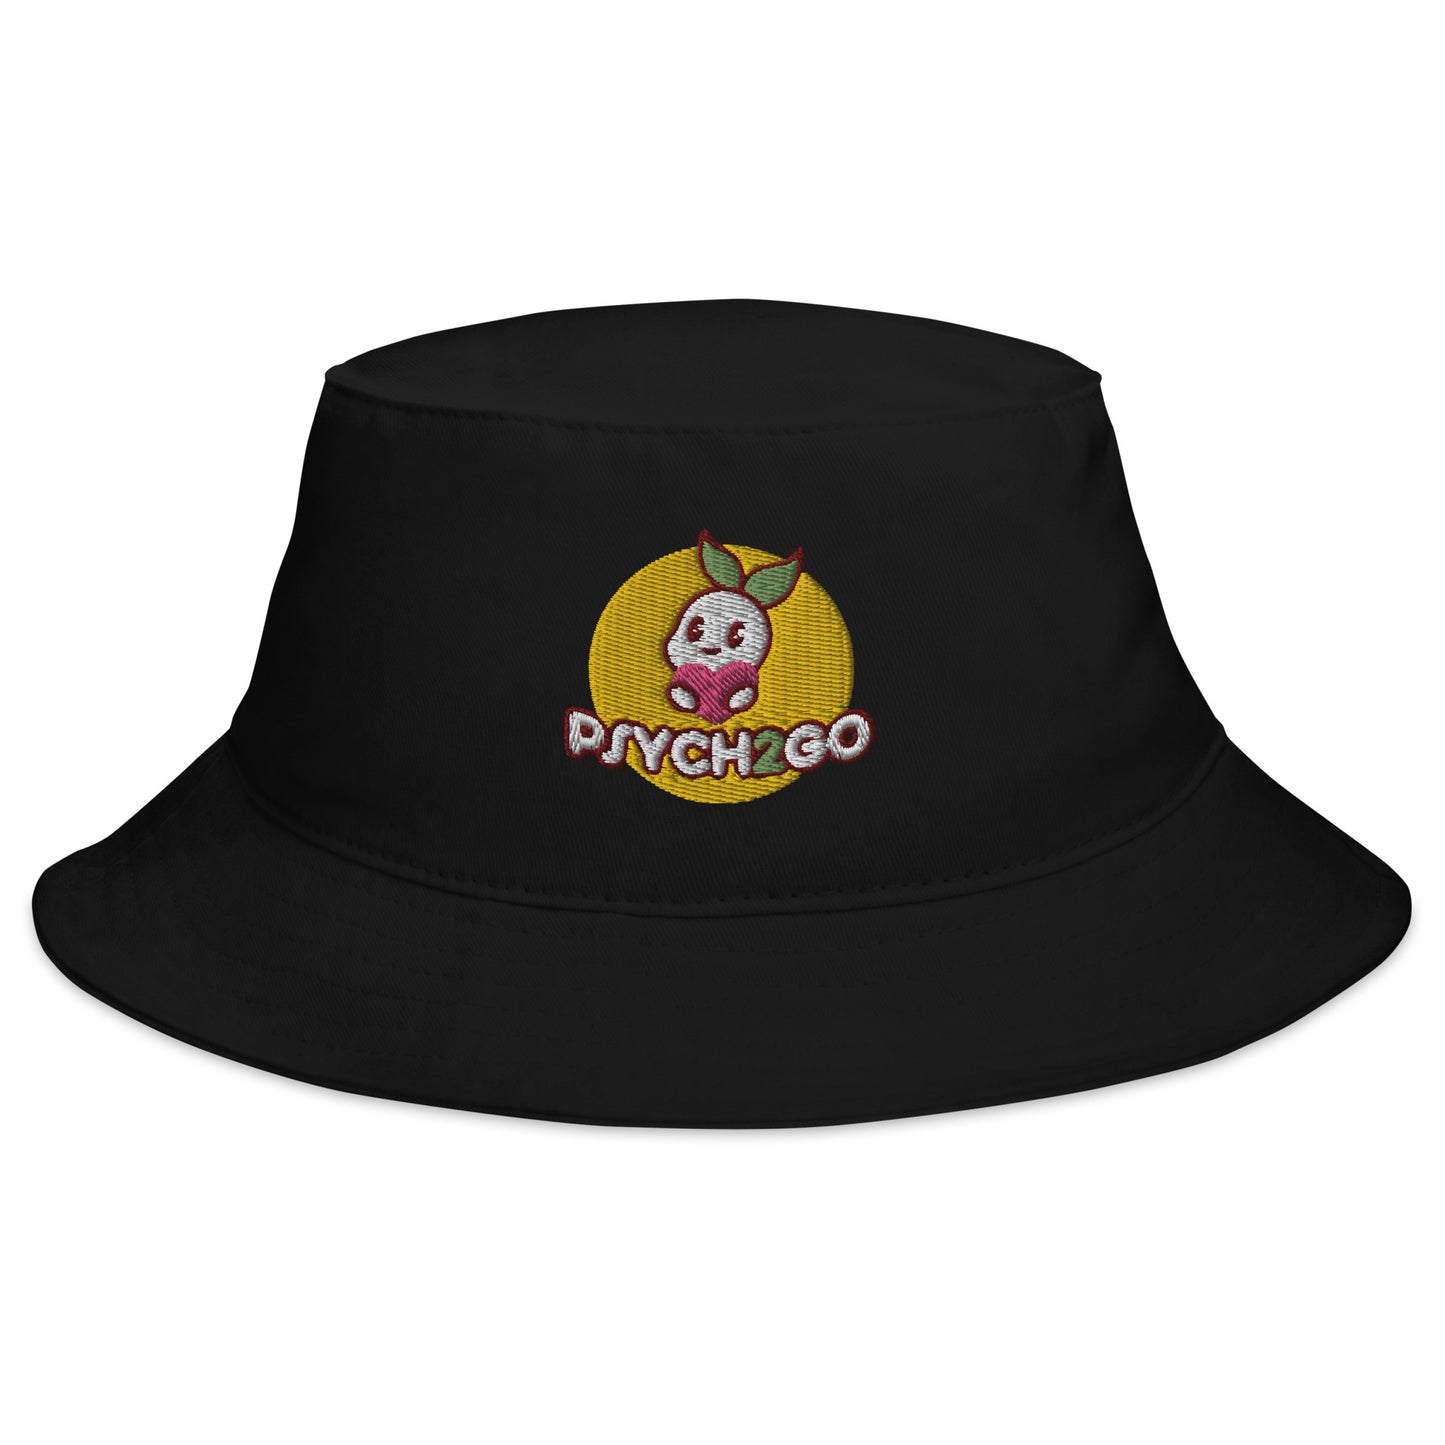 Psych2Go Bucket Hat